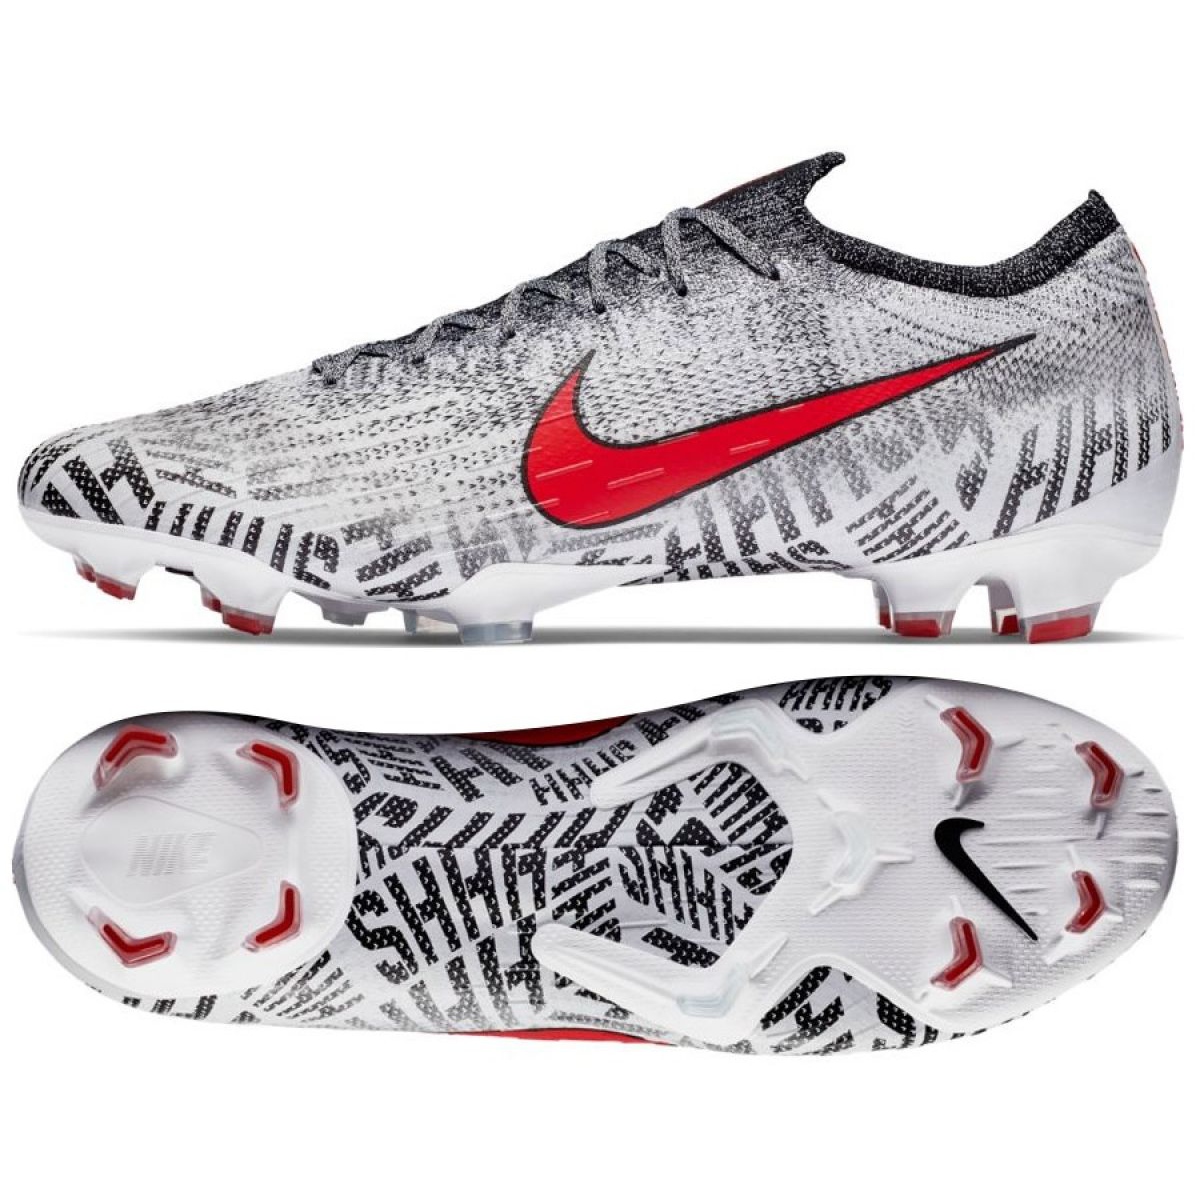 Nike Merurial Vapor 12 Elite Neymar Fg M AO3126-170 Football Shoes grey  white - ButyModne.pl